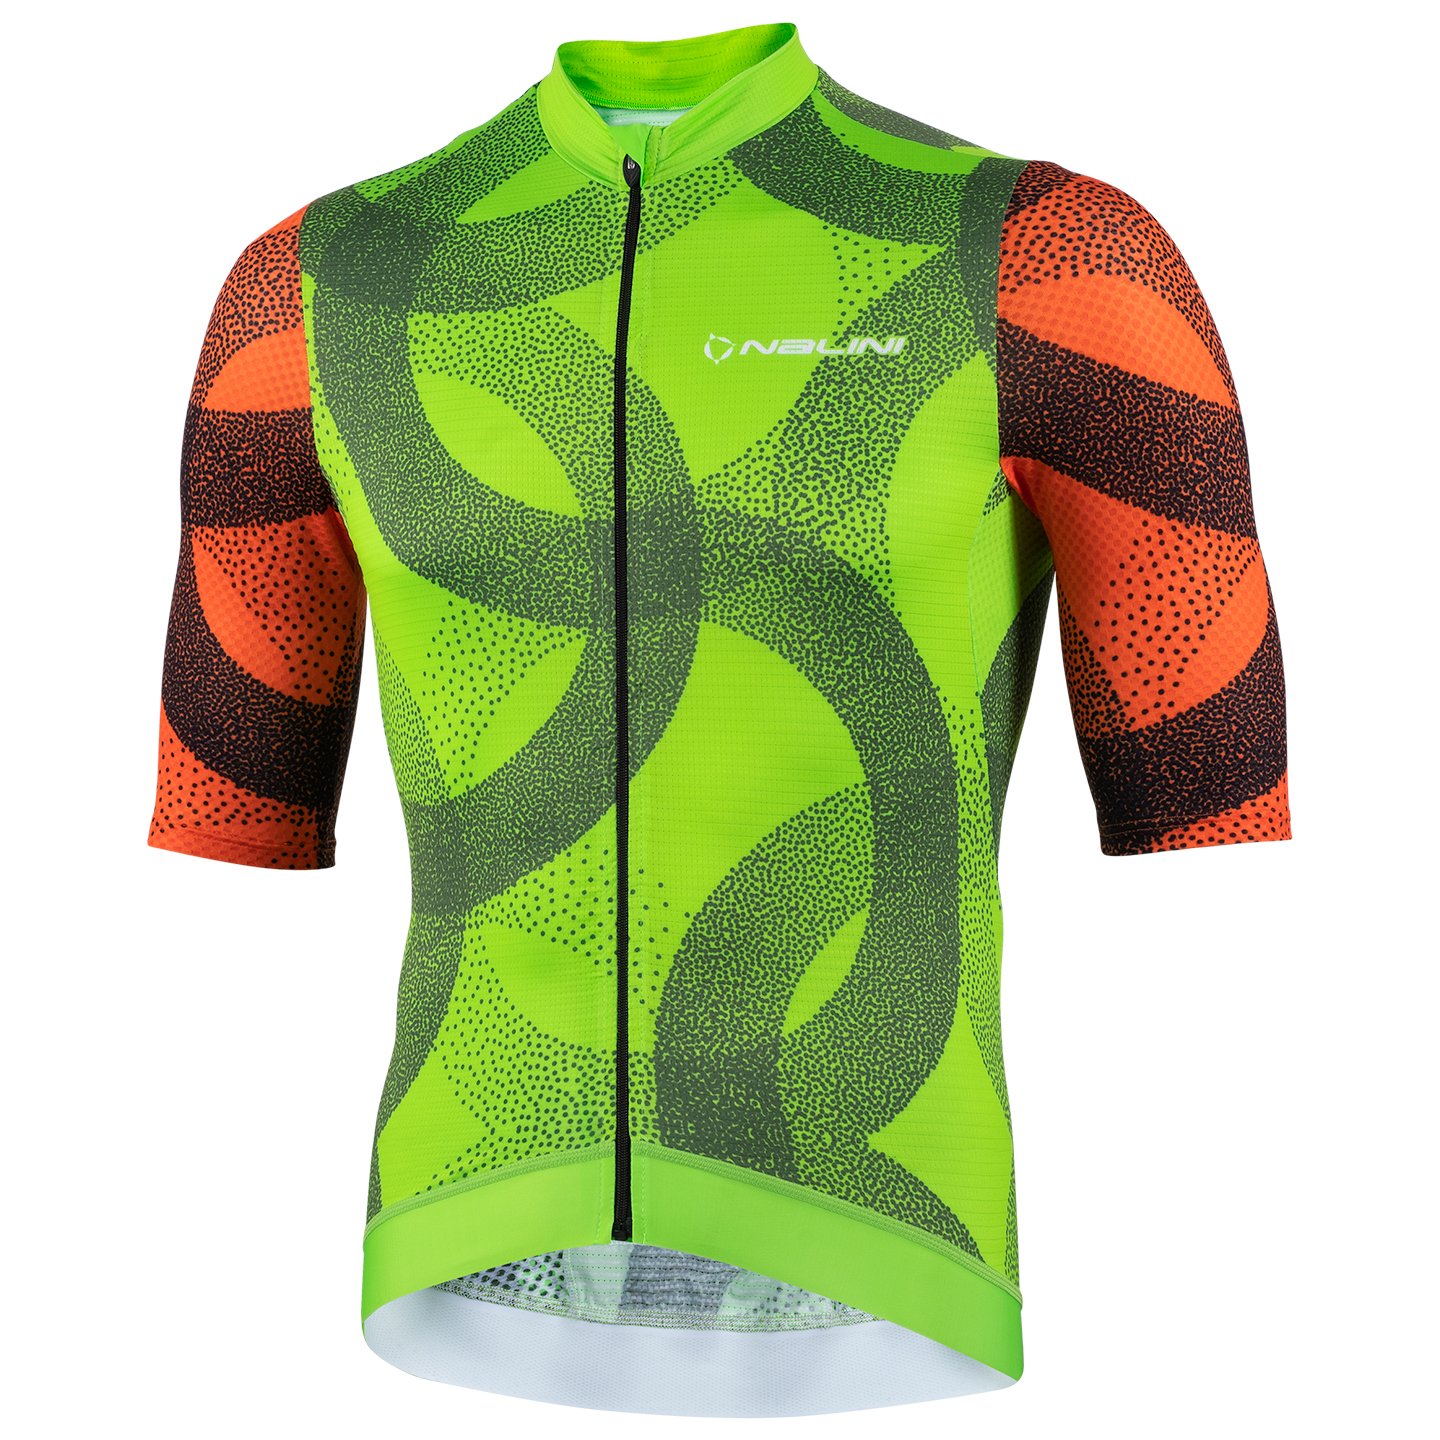 NALINI Short Sleeve Jersey Minnesota, for men, size 2XL, Cycling jersey, Cycle clothing